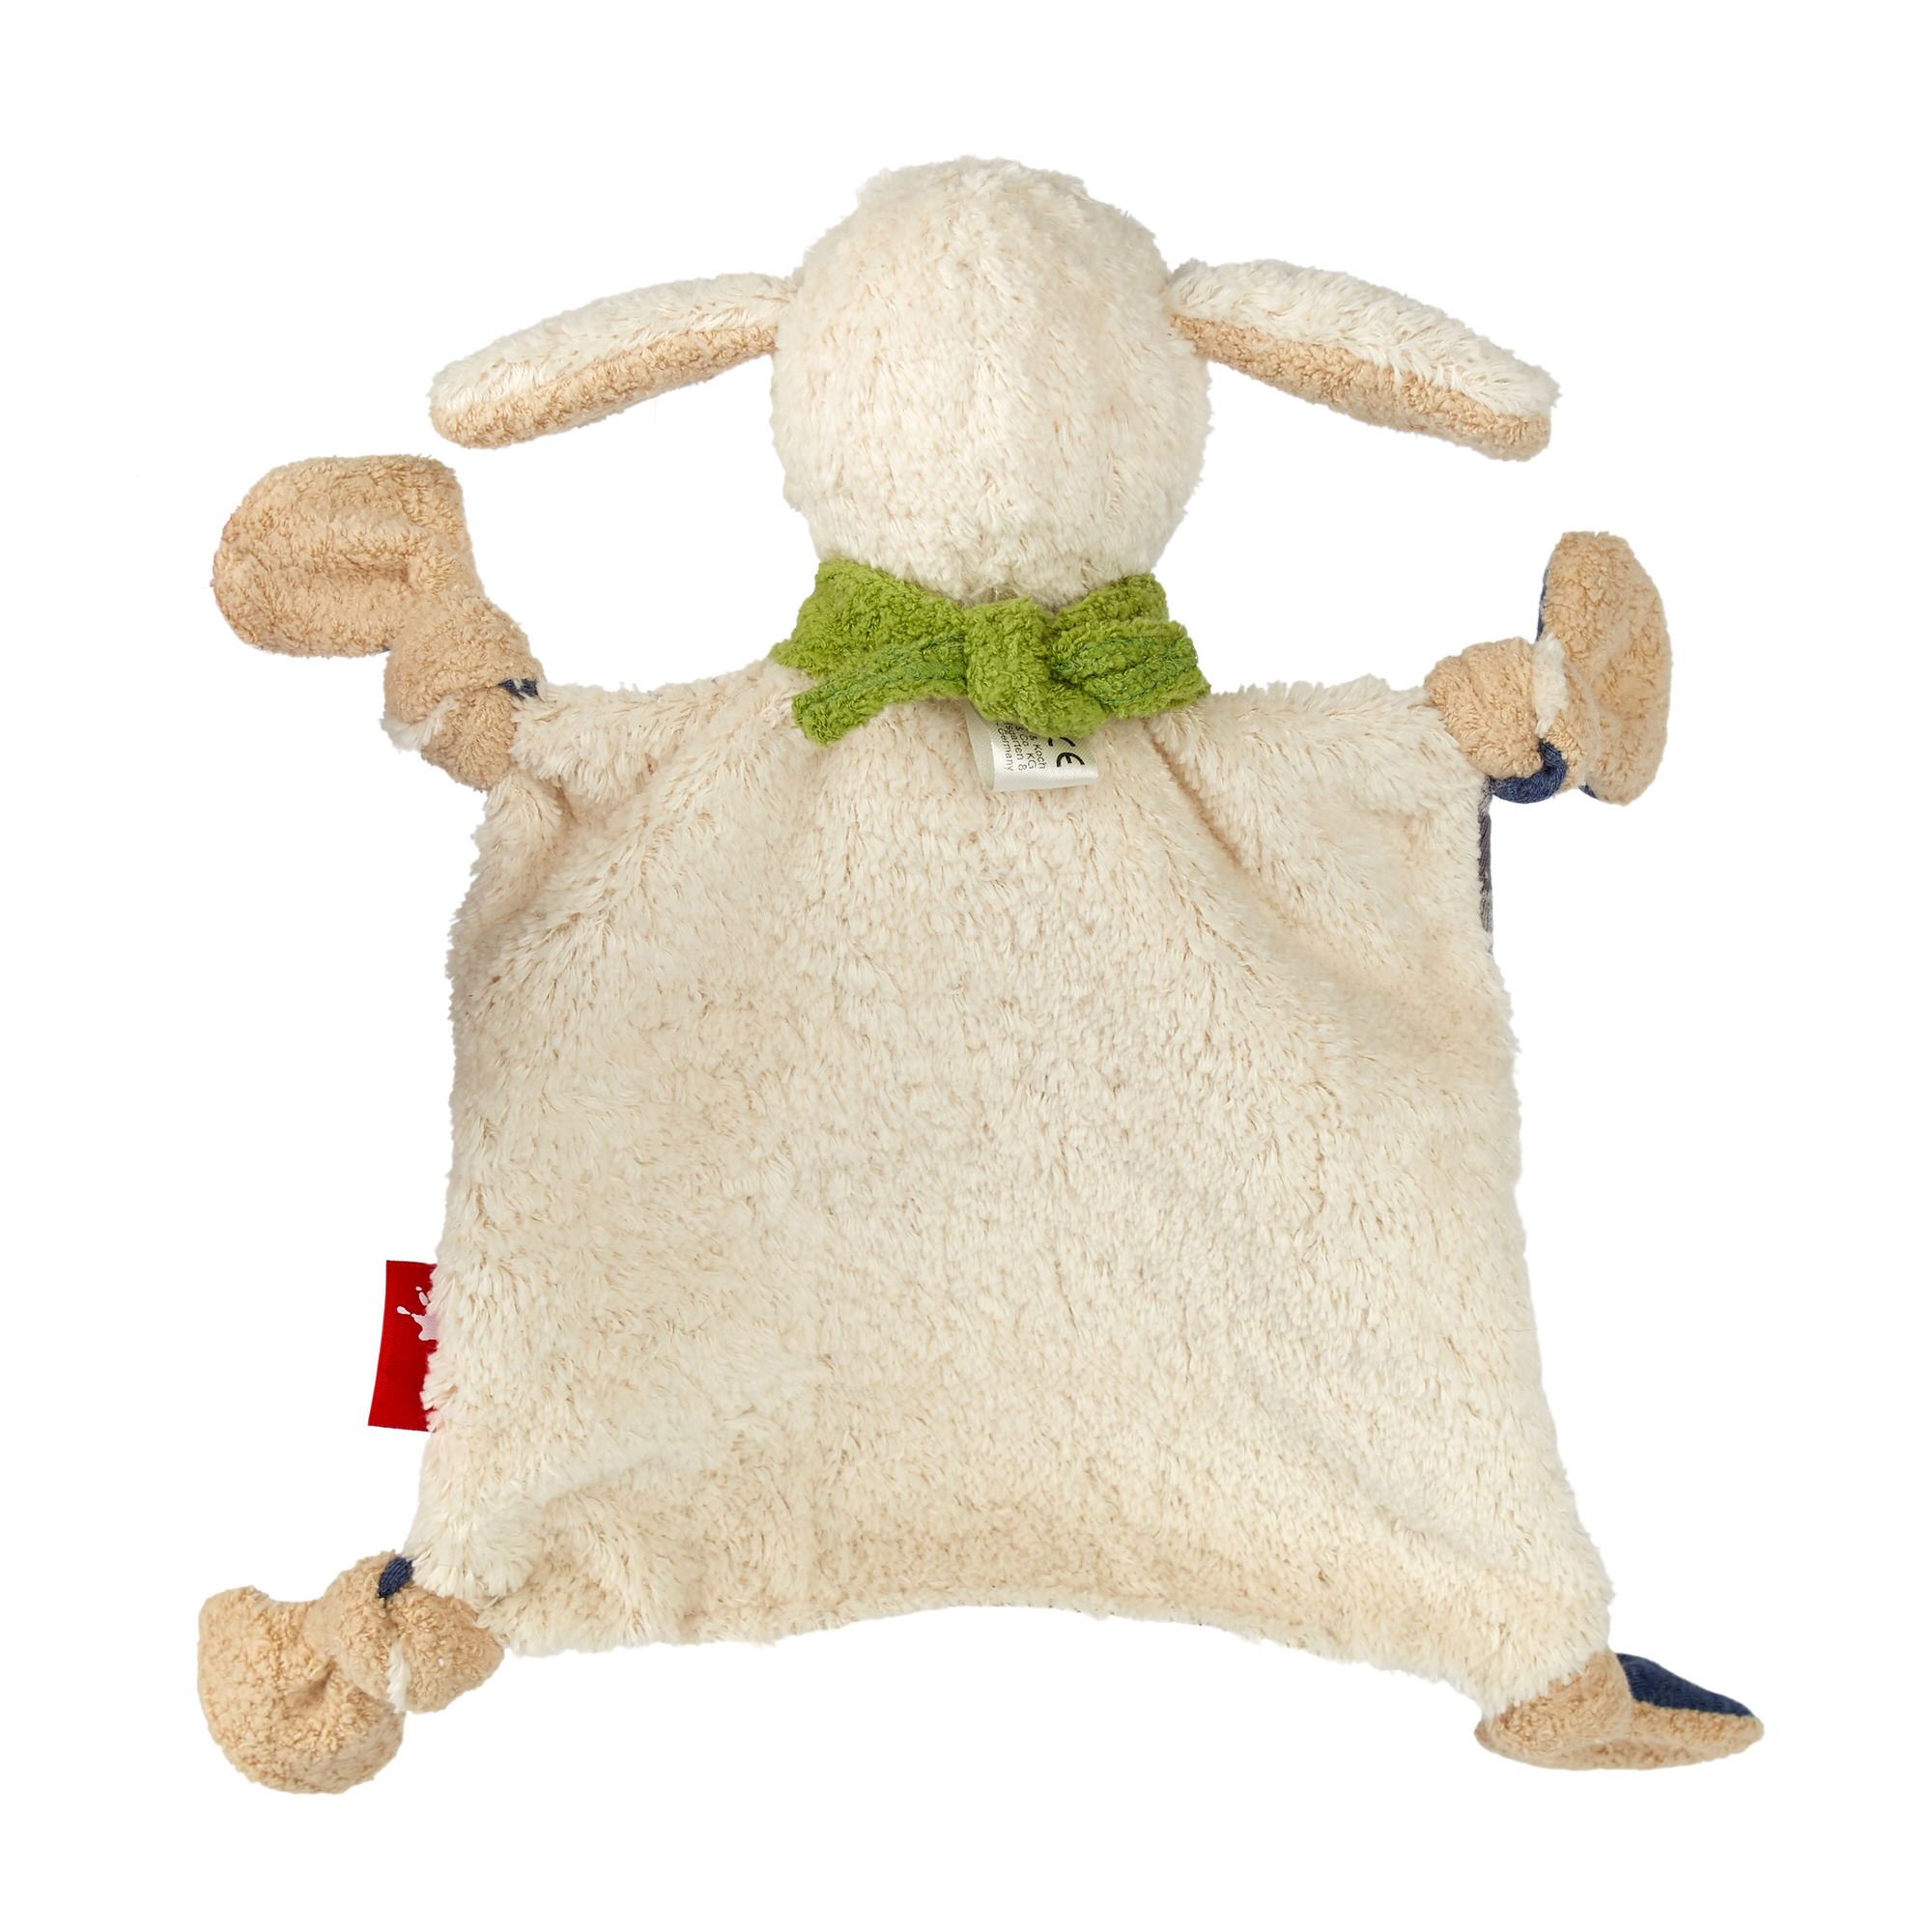 Snuggle blankie sheep for babies